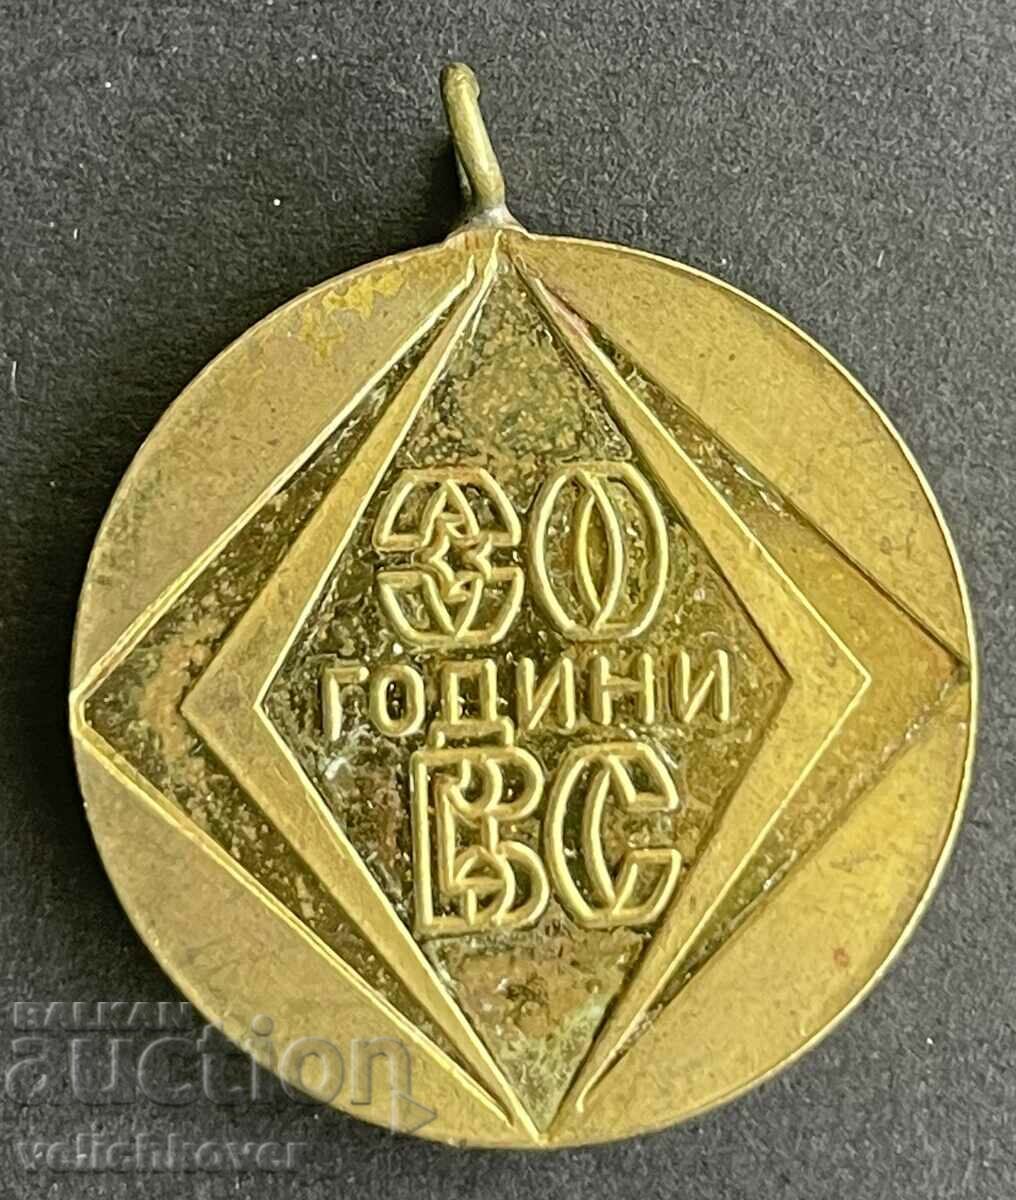 36026 Bulgaria medalie 30 ani Materii prime secundare 1978